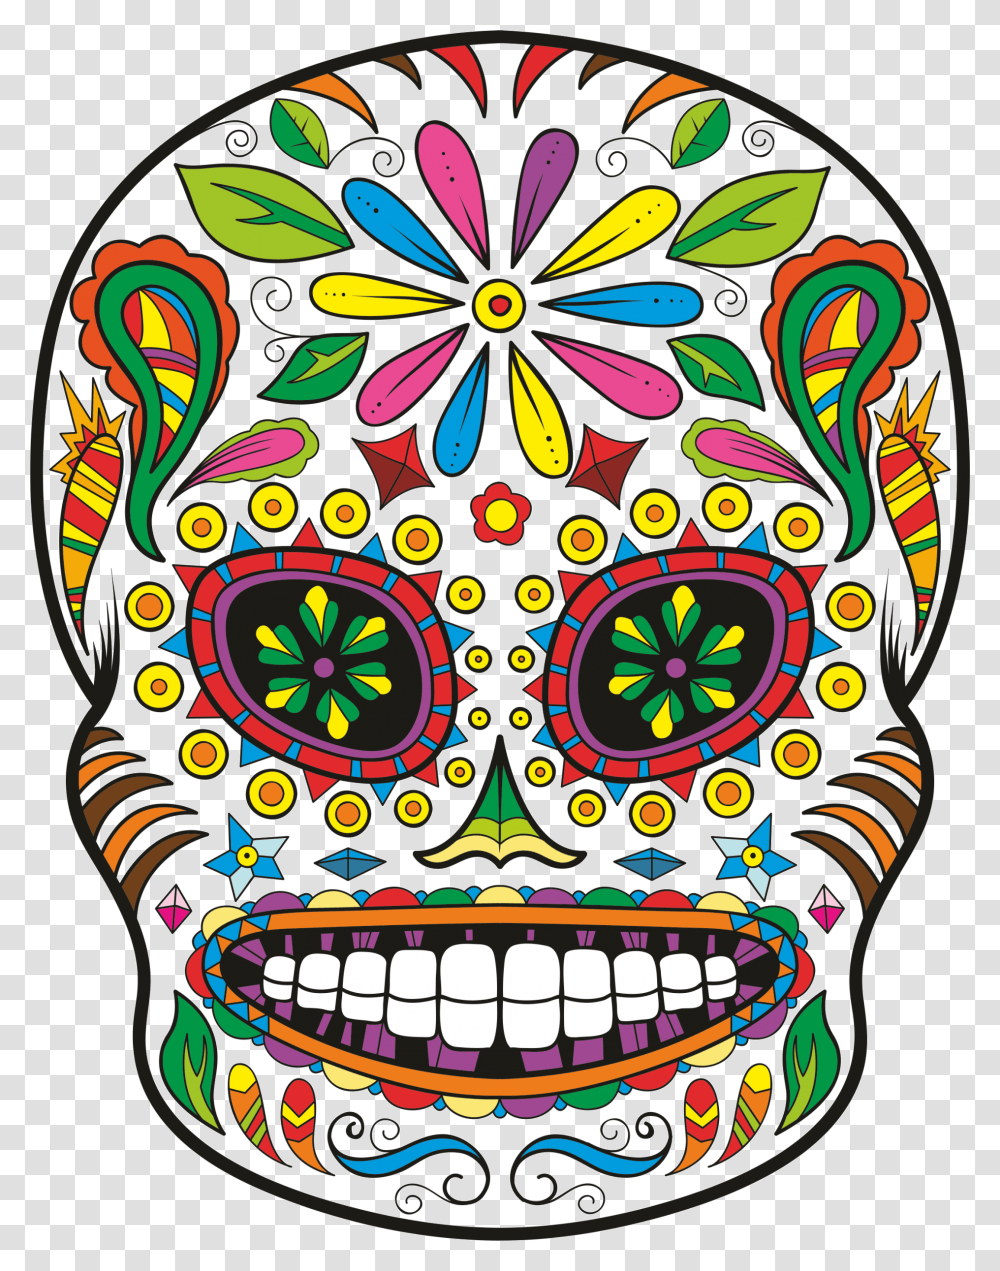 Download Wallpaper Clipart Full Colorful Sugar Skull Designs, Doodle, Drawing, Floral Design Transparent Png